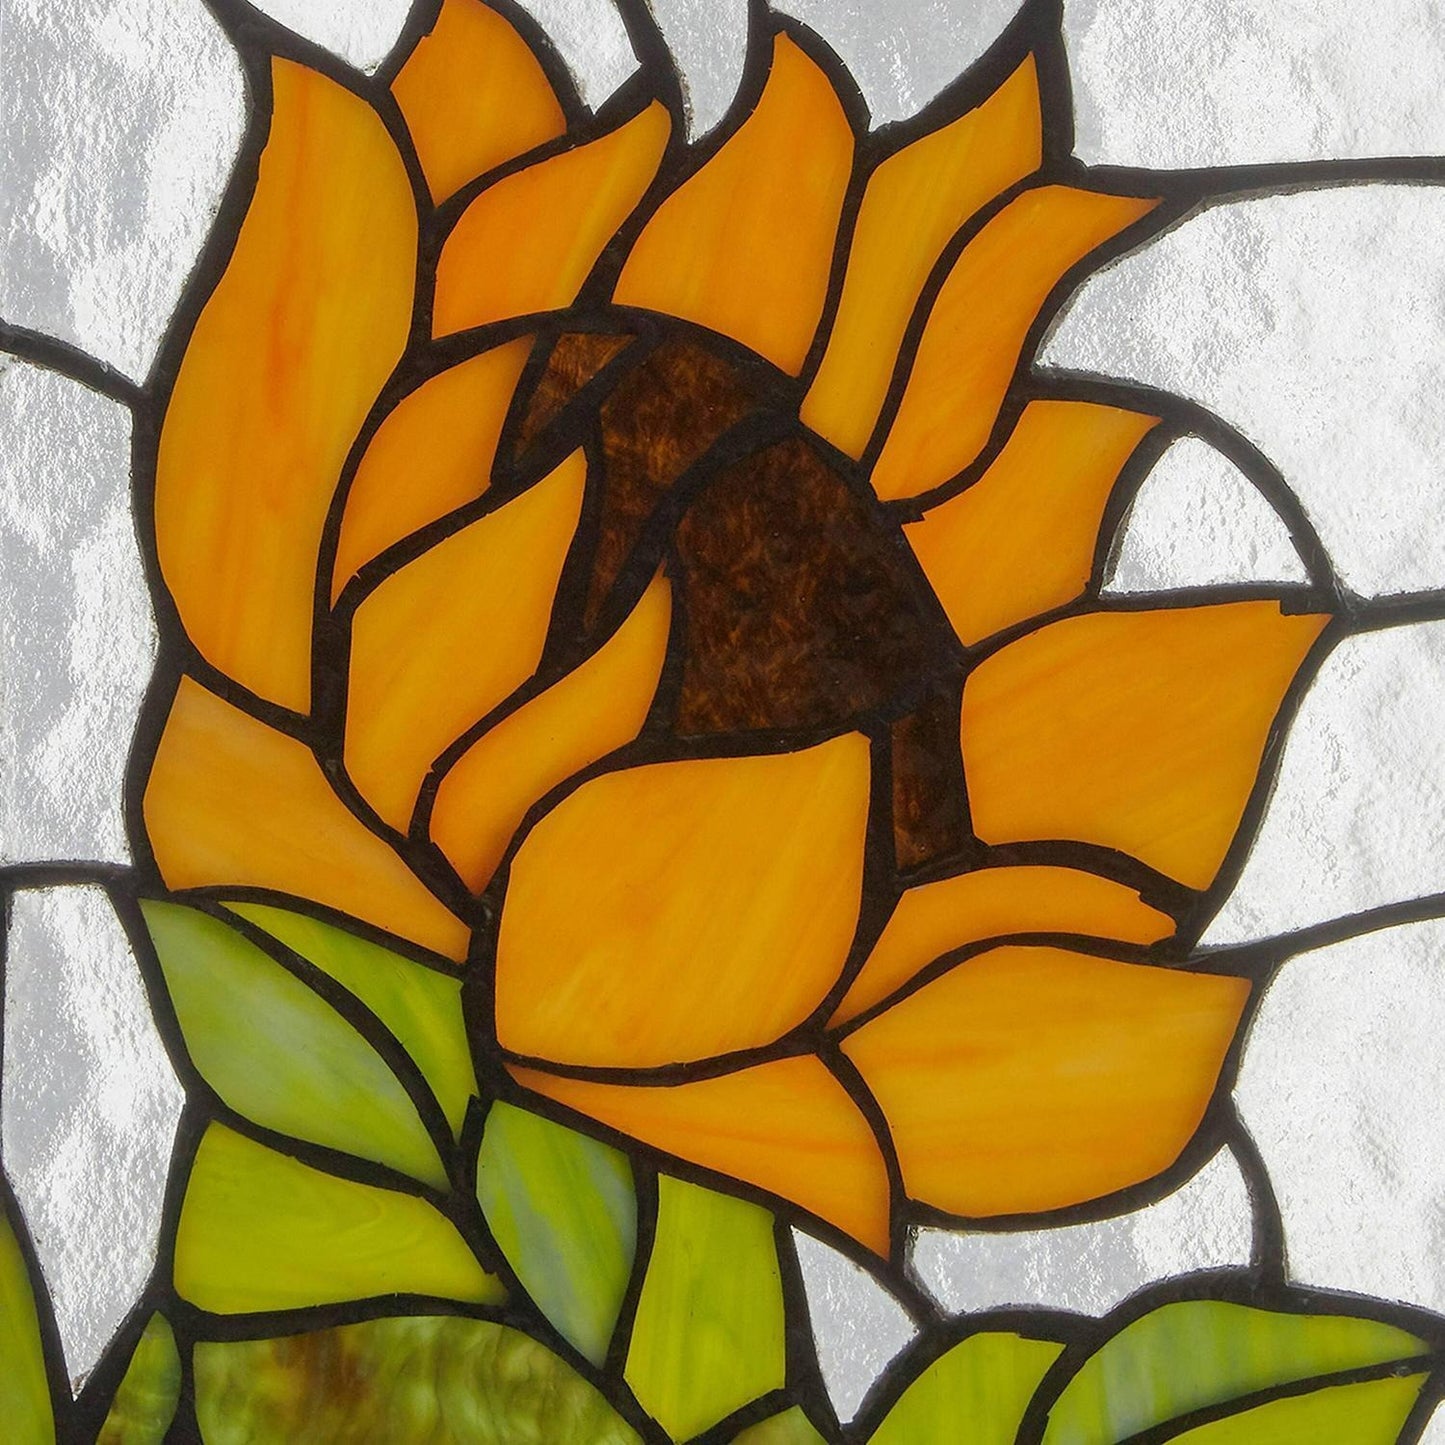 Tiffany Style Stained Glass Window Panel Suncatcher Sunflower Theme 8x11in